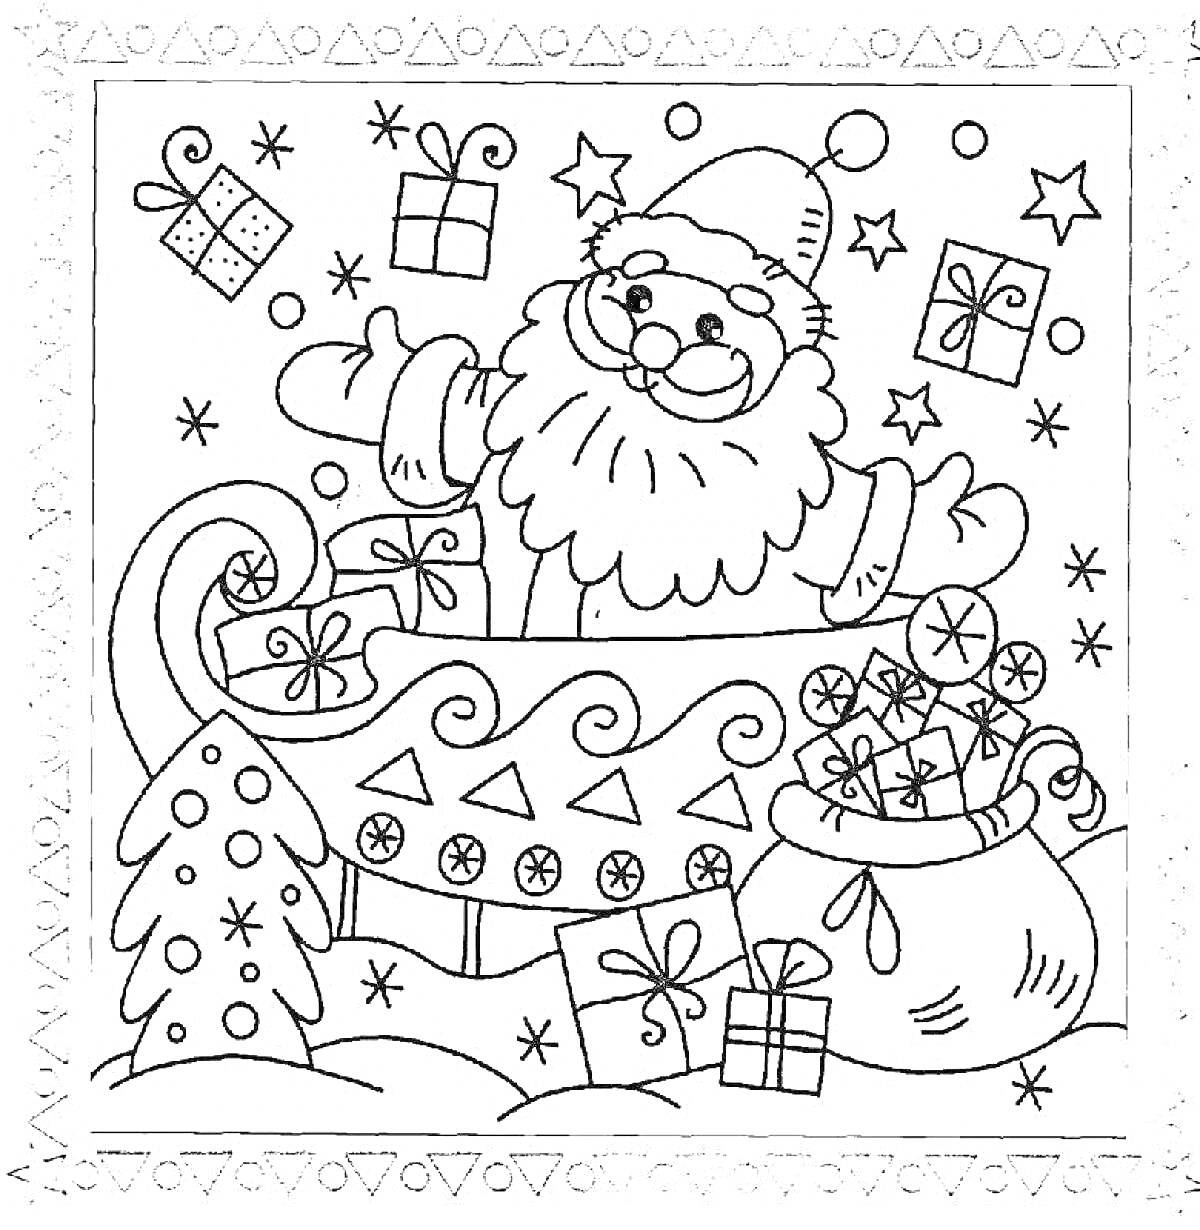 На раскраске изображено: Сани, Подарки, Новогодняя открытка, Мешок с подарками, Звезды, Санта Клаус, Елки